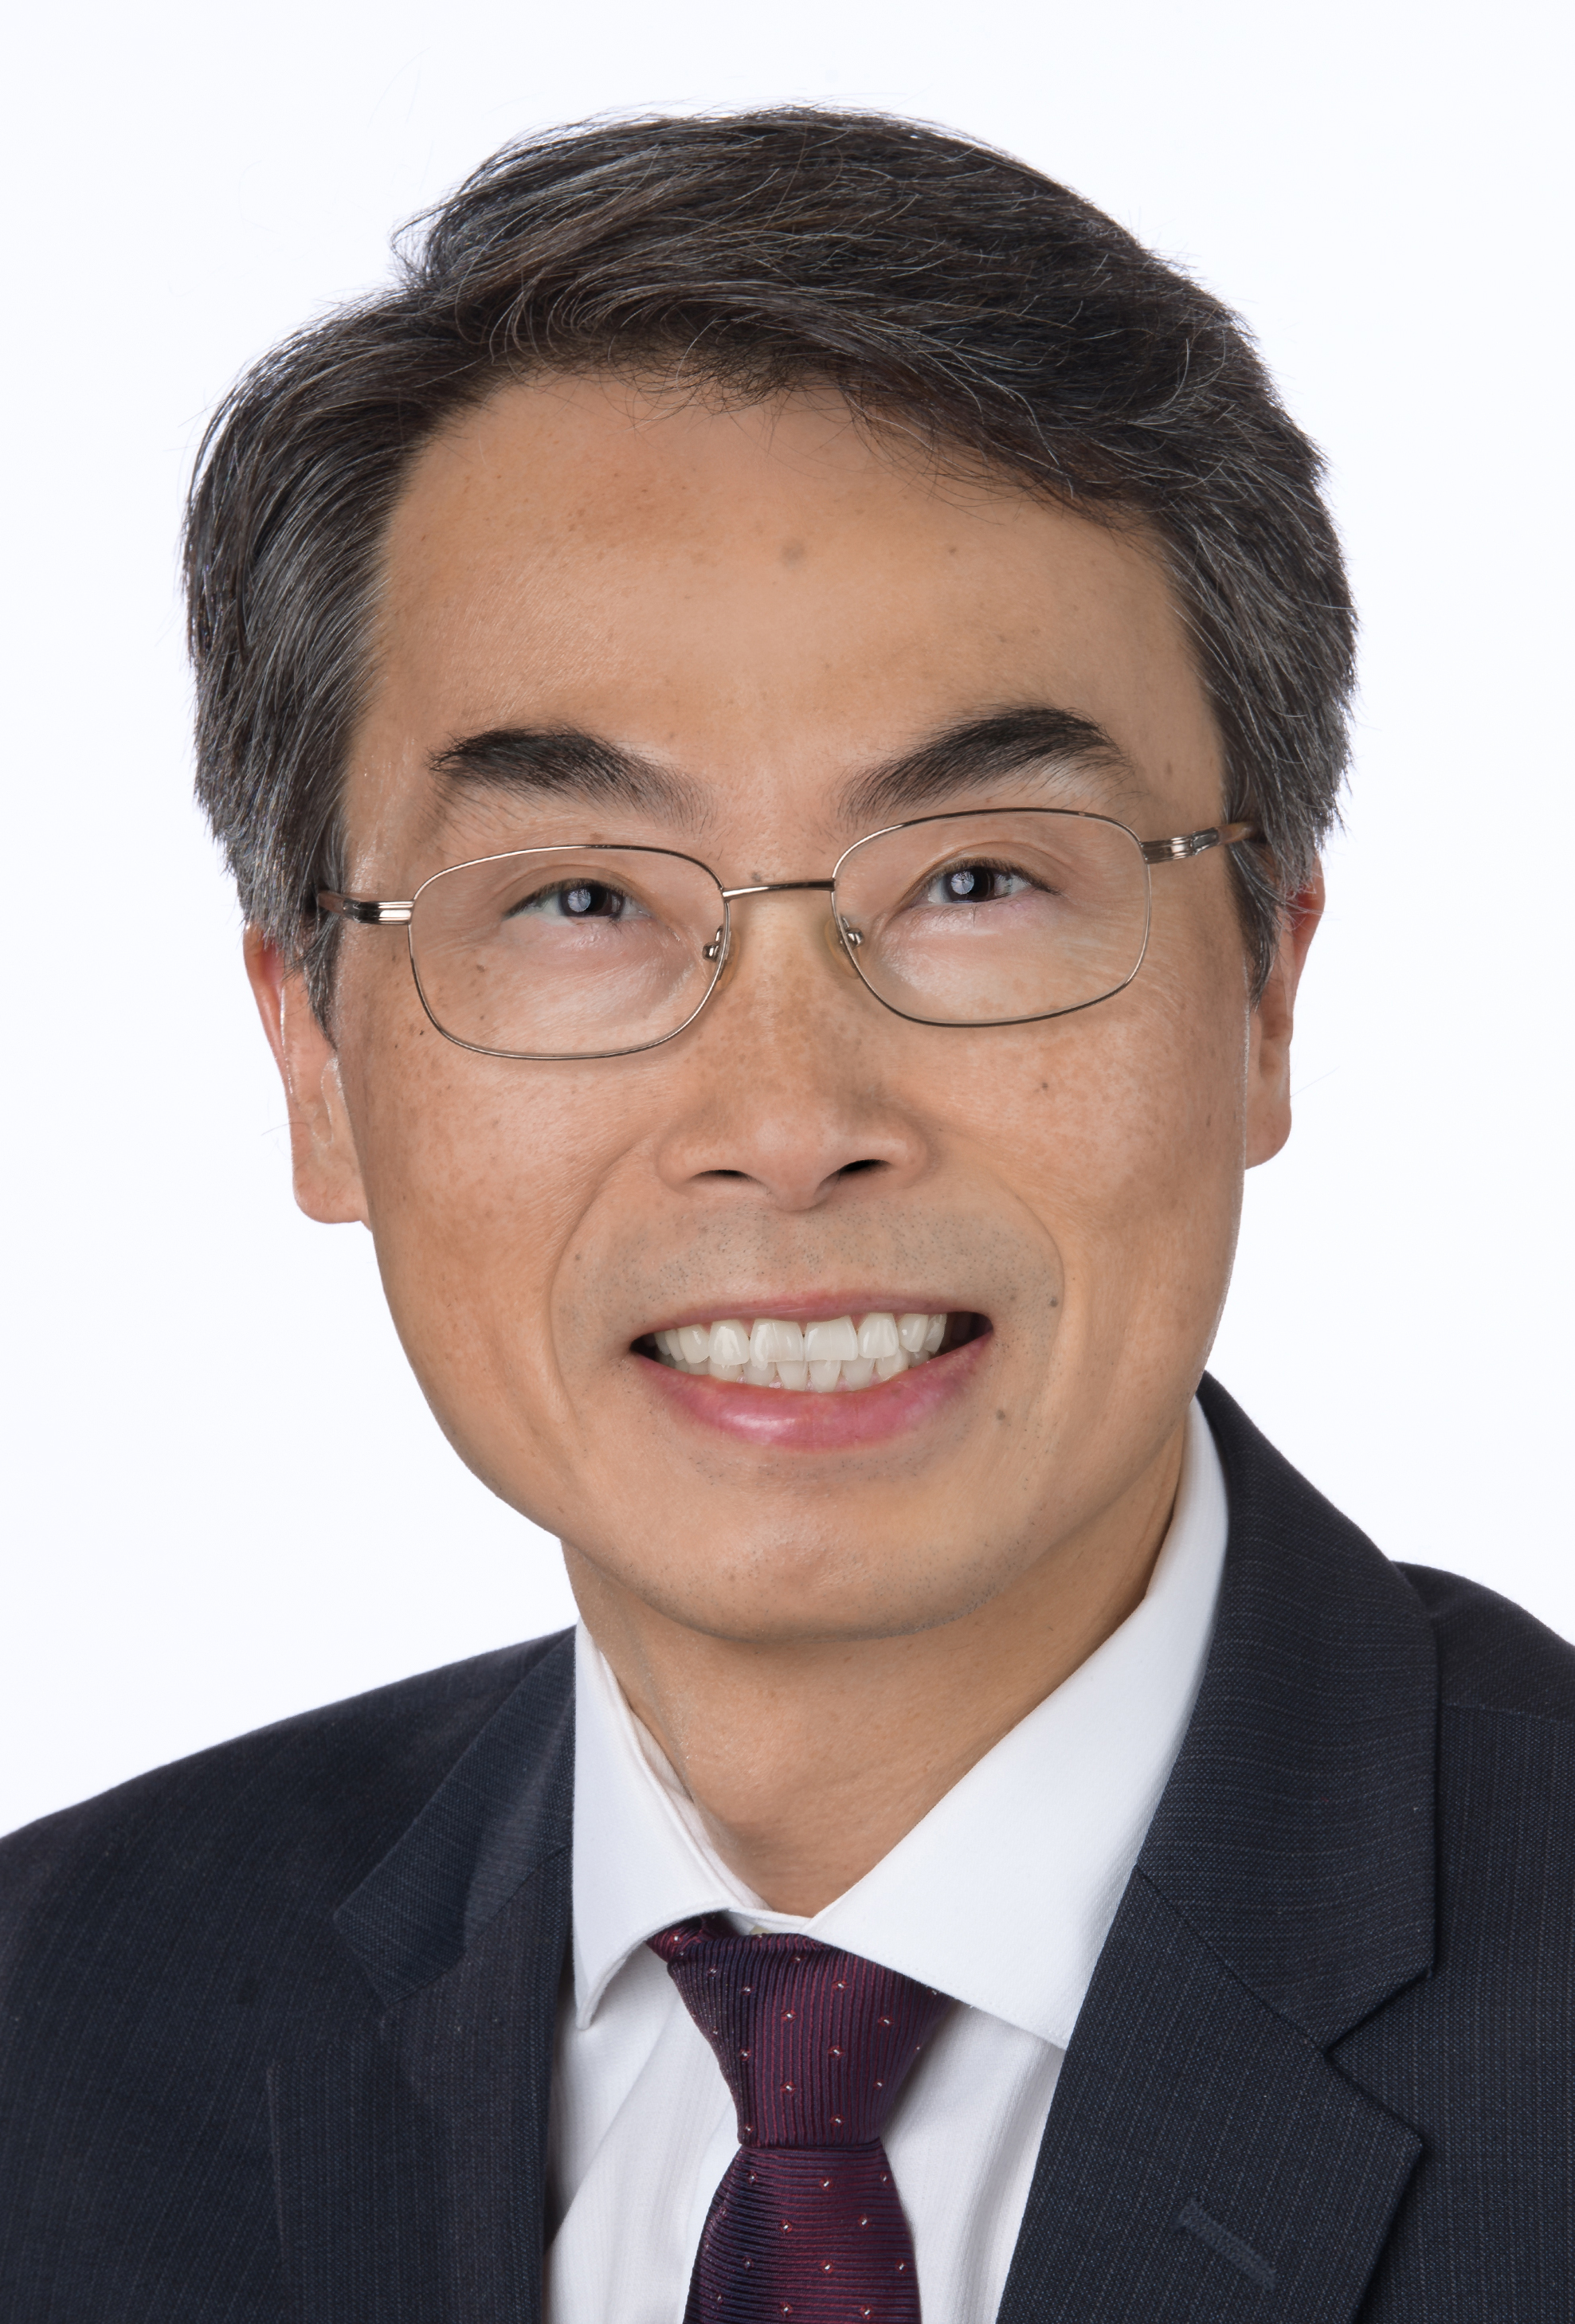 Dr. Joseph Wu, Gill Award Winner